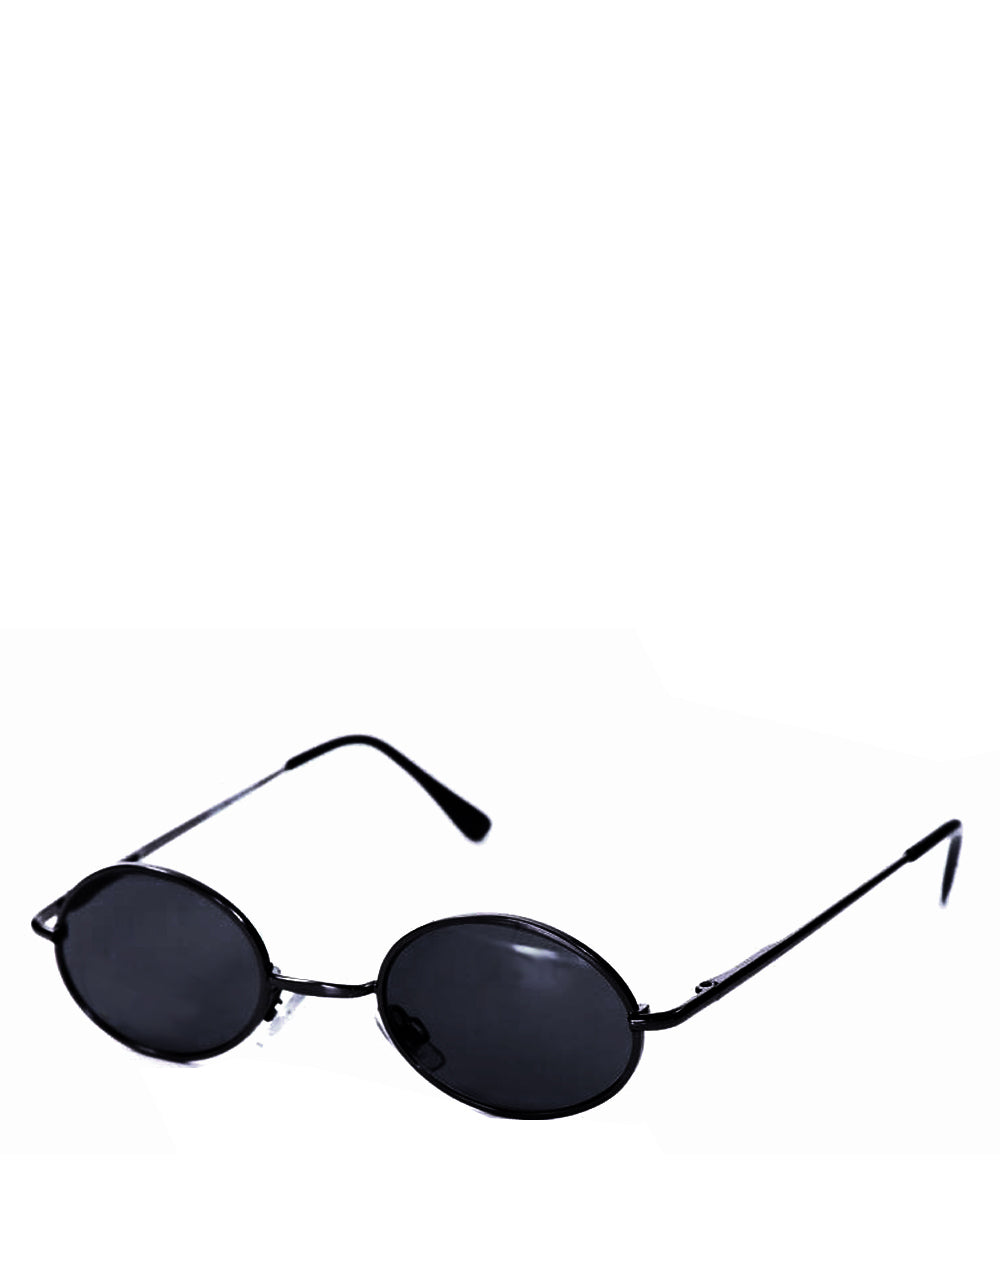 Seraph Style Sunglasses, Gunmetal Frame / Smoke Mirror Lens